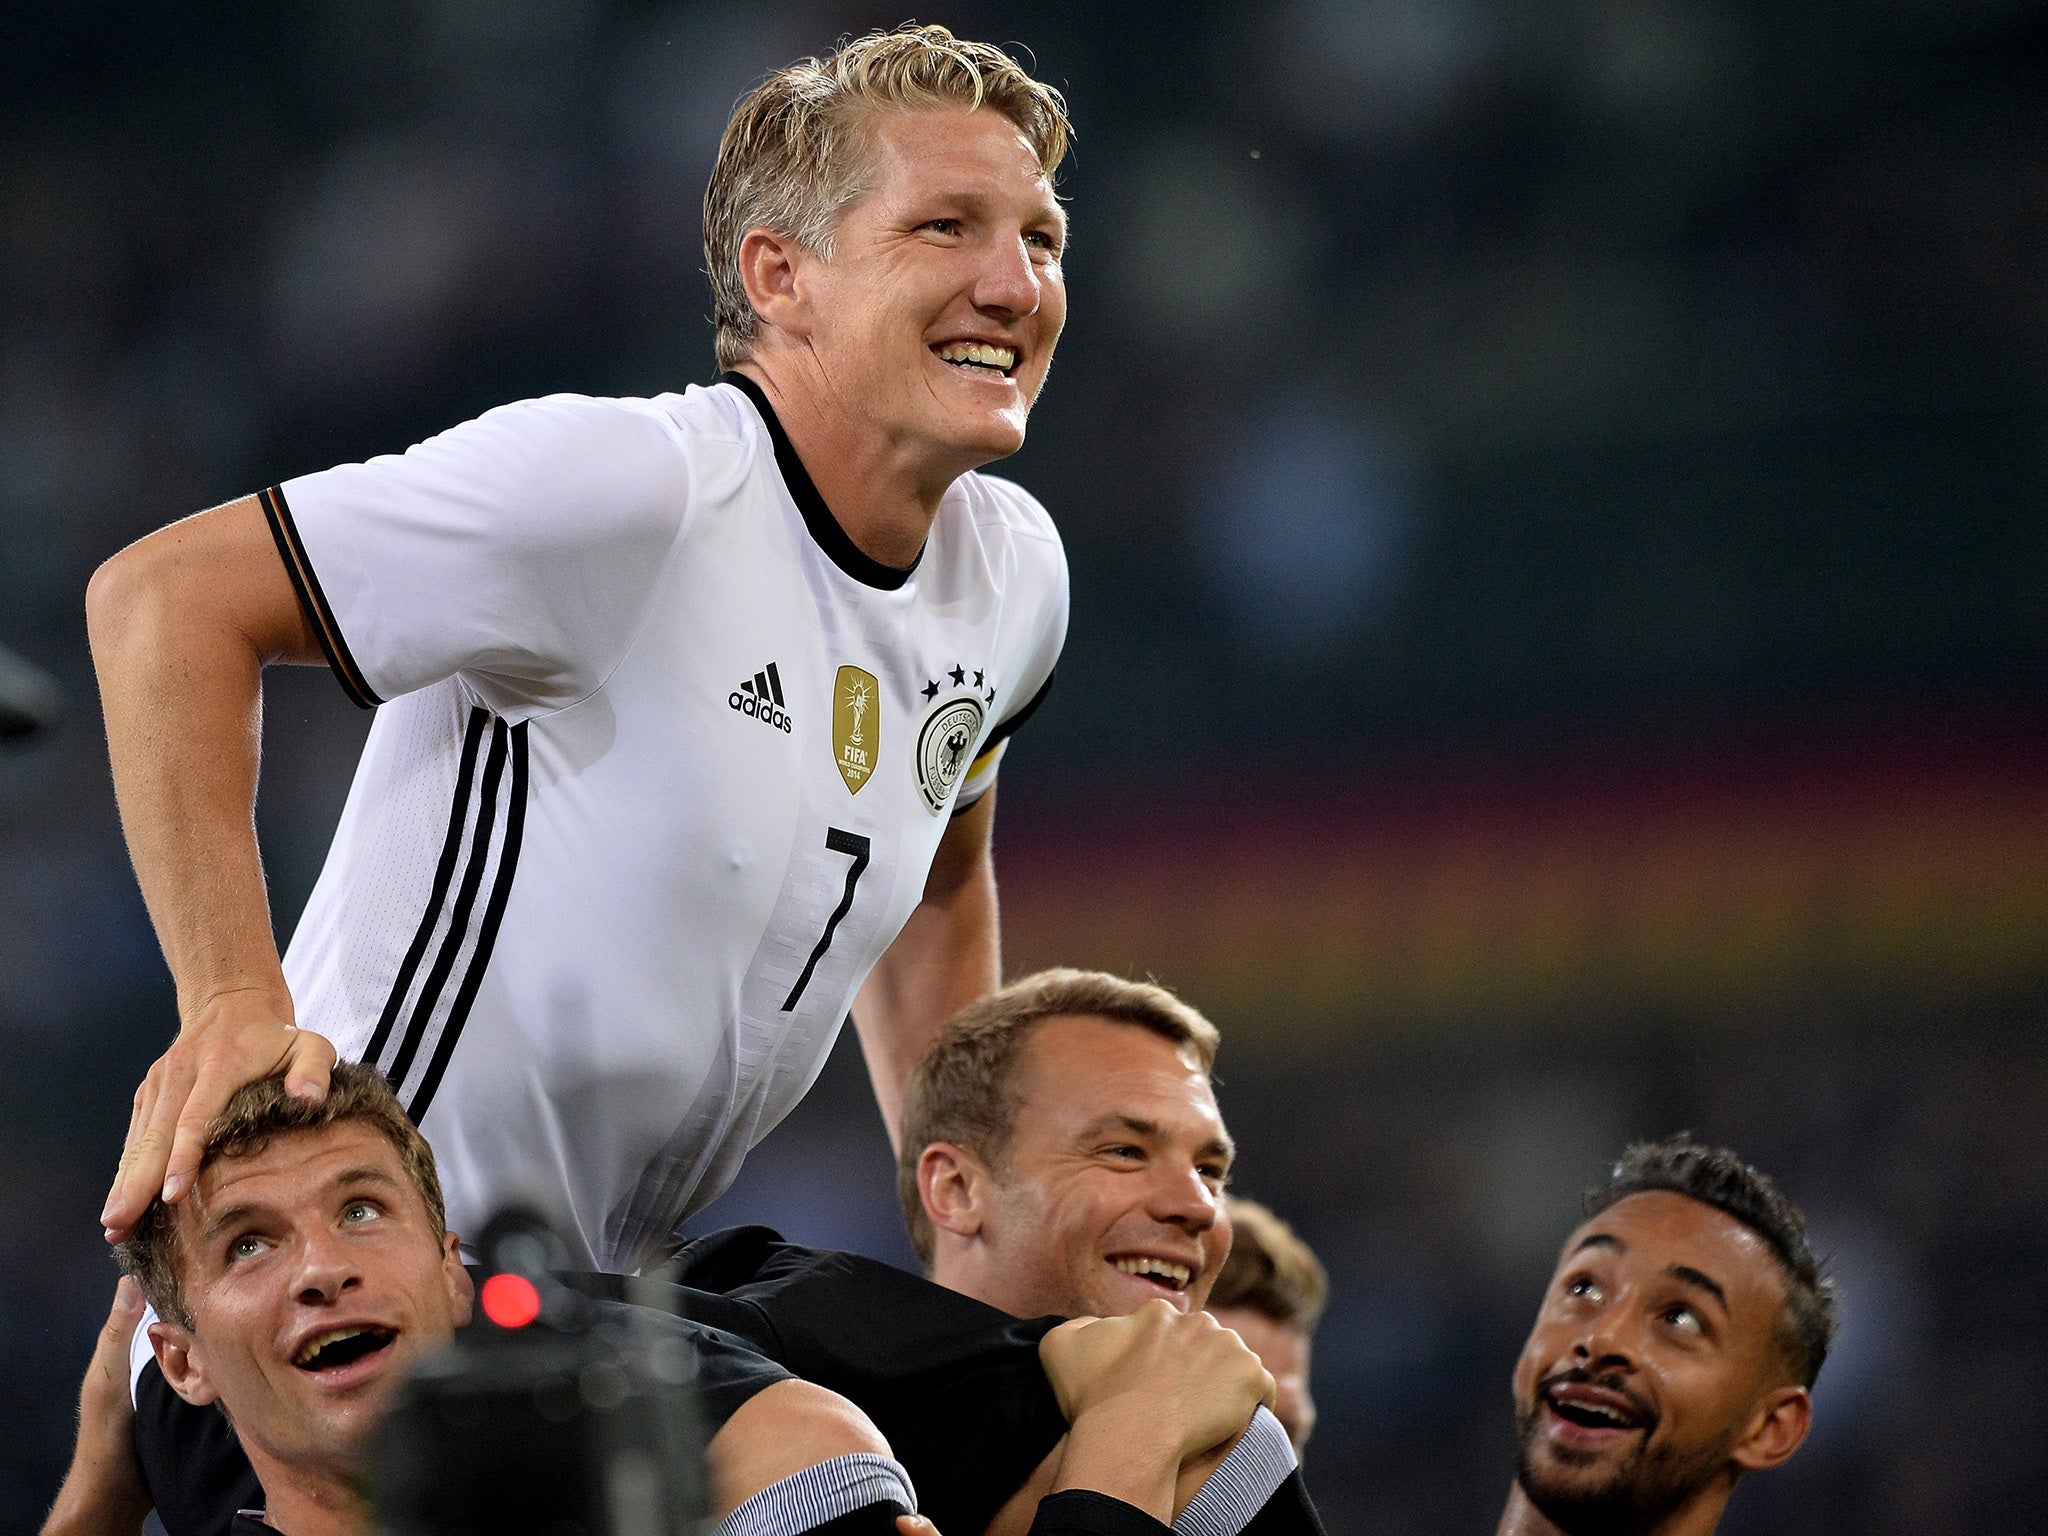 Schweinsteiger retired from international duty in September